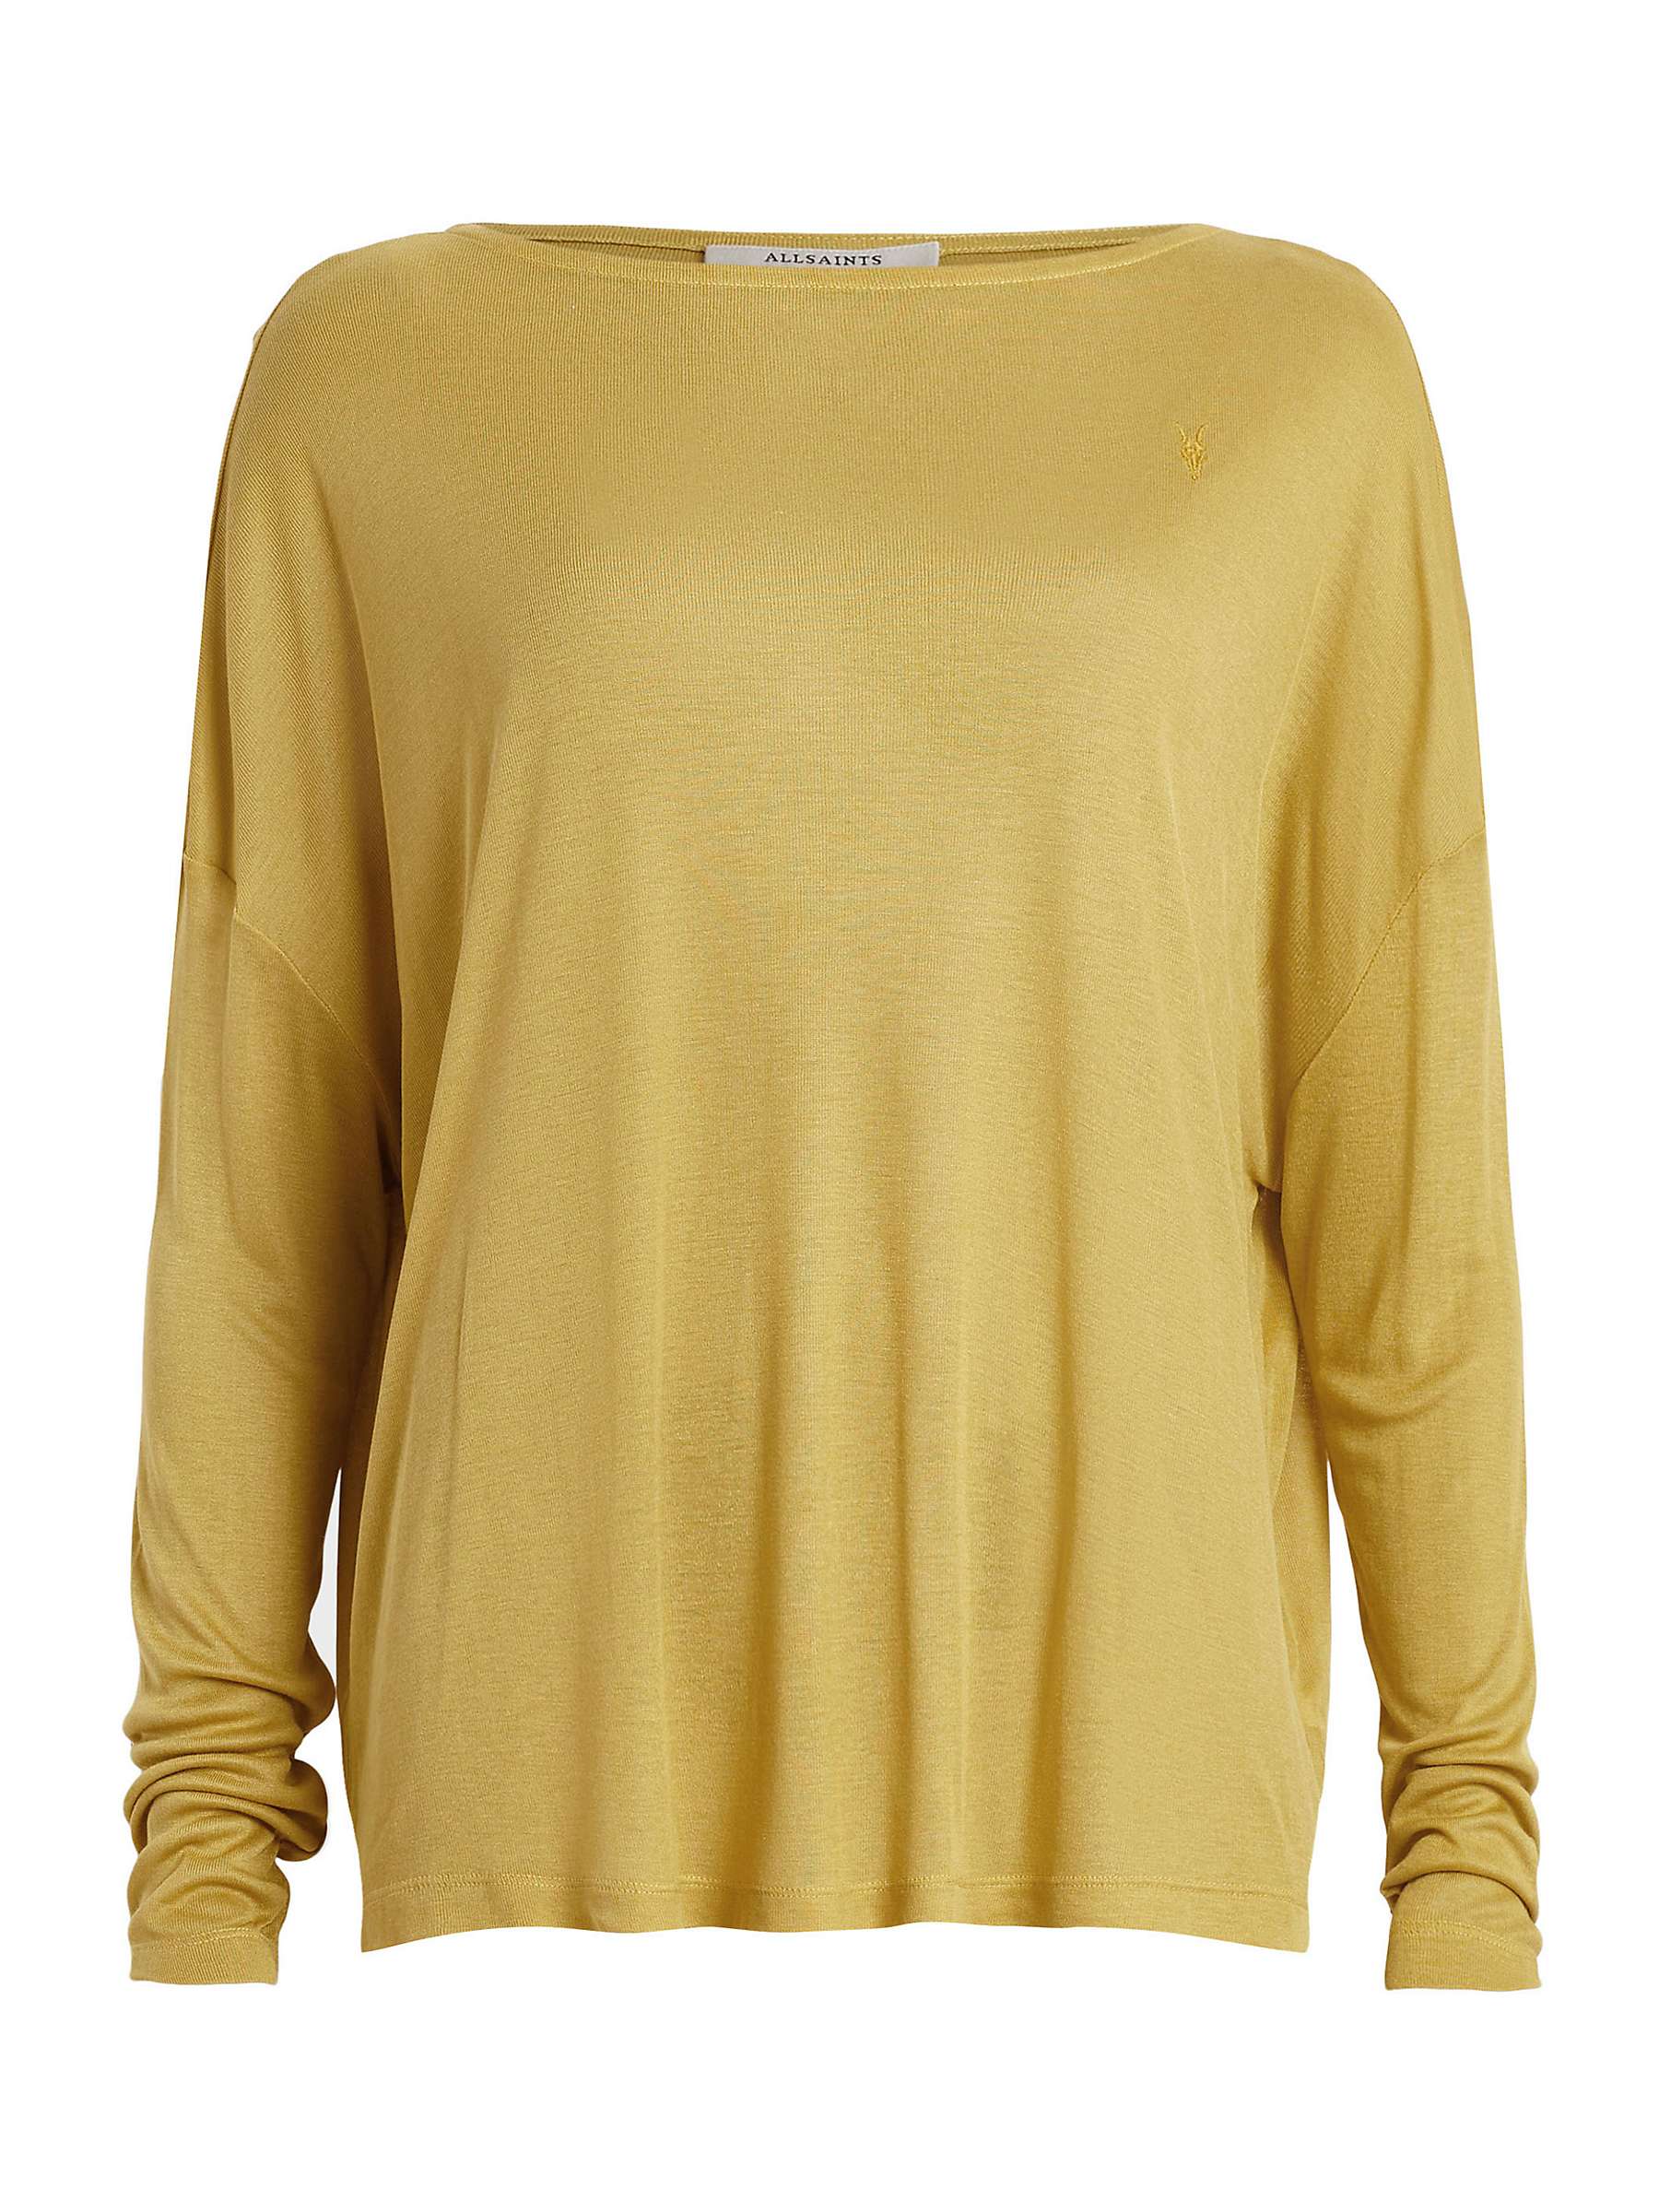 Buy AllSaints Rita Francesoco Jersey Top, Golden Palm Green Online at johnlewis.com